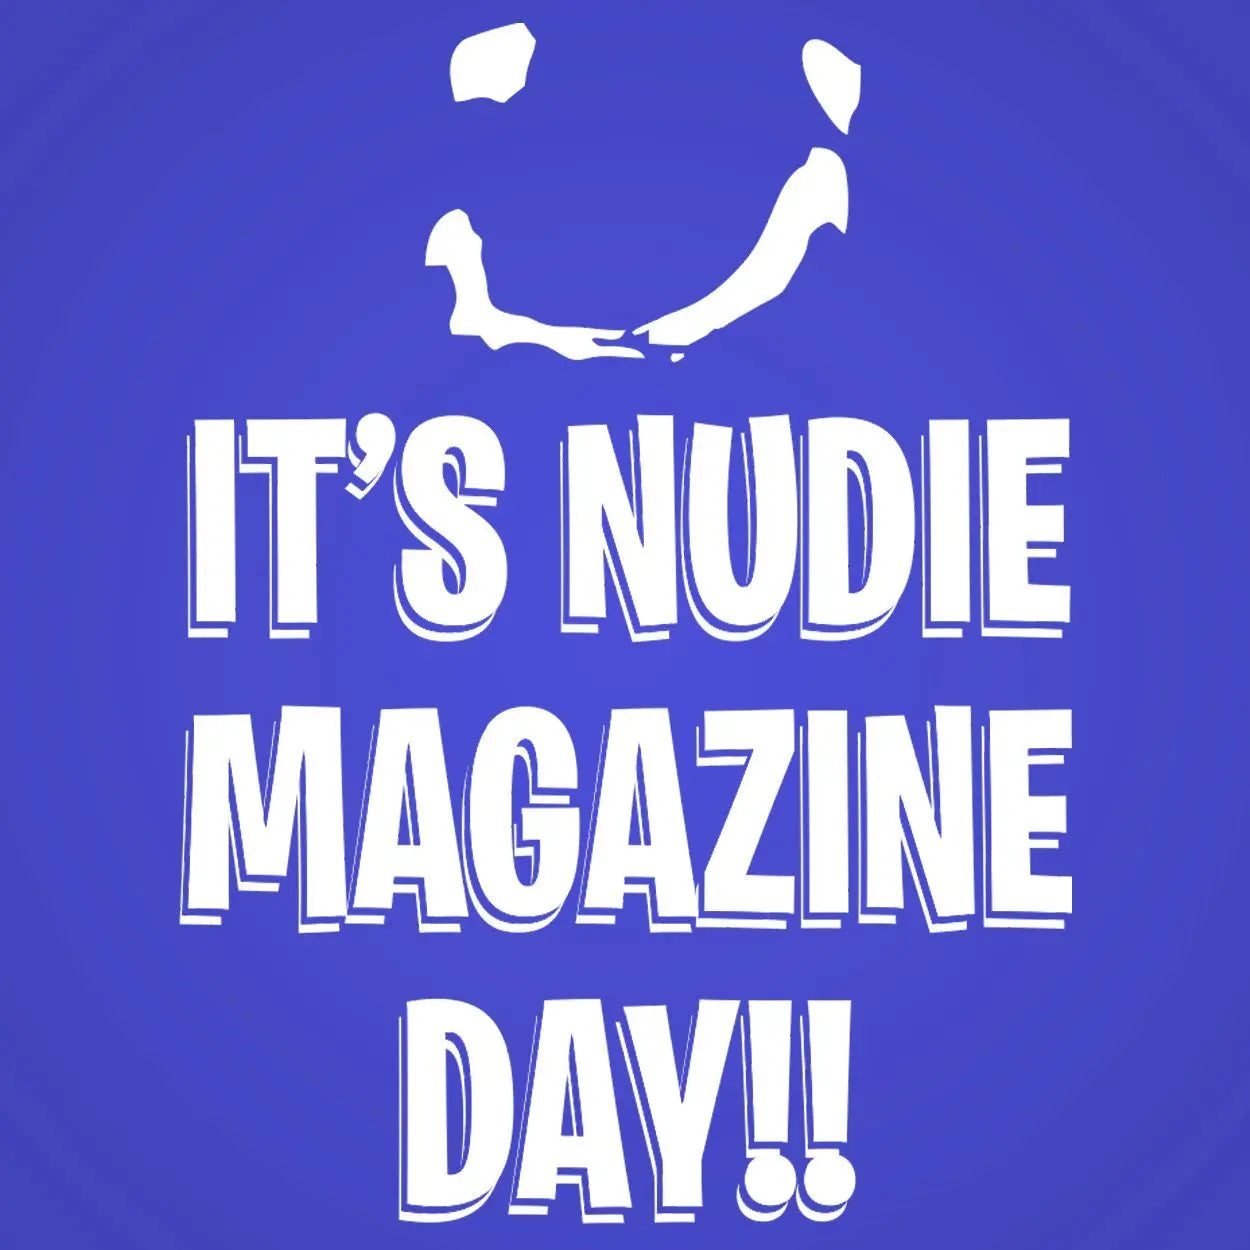 It's Nudie Magazine Day Tshirt - Donkey Tees